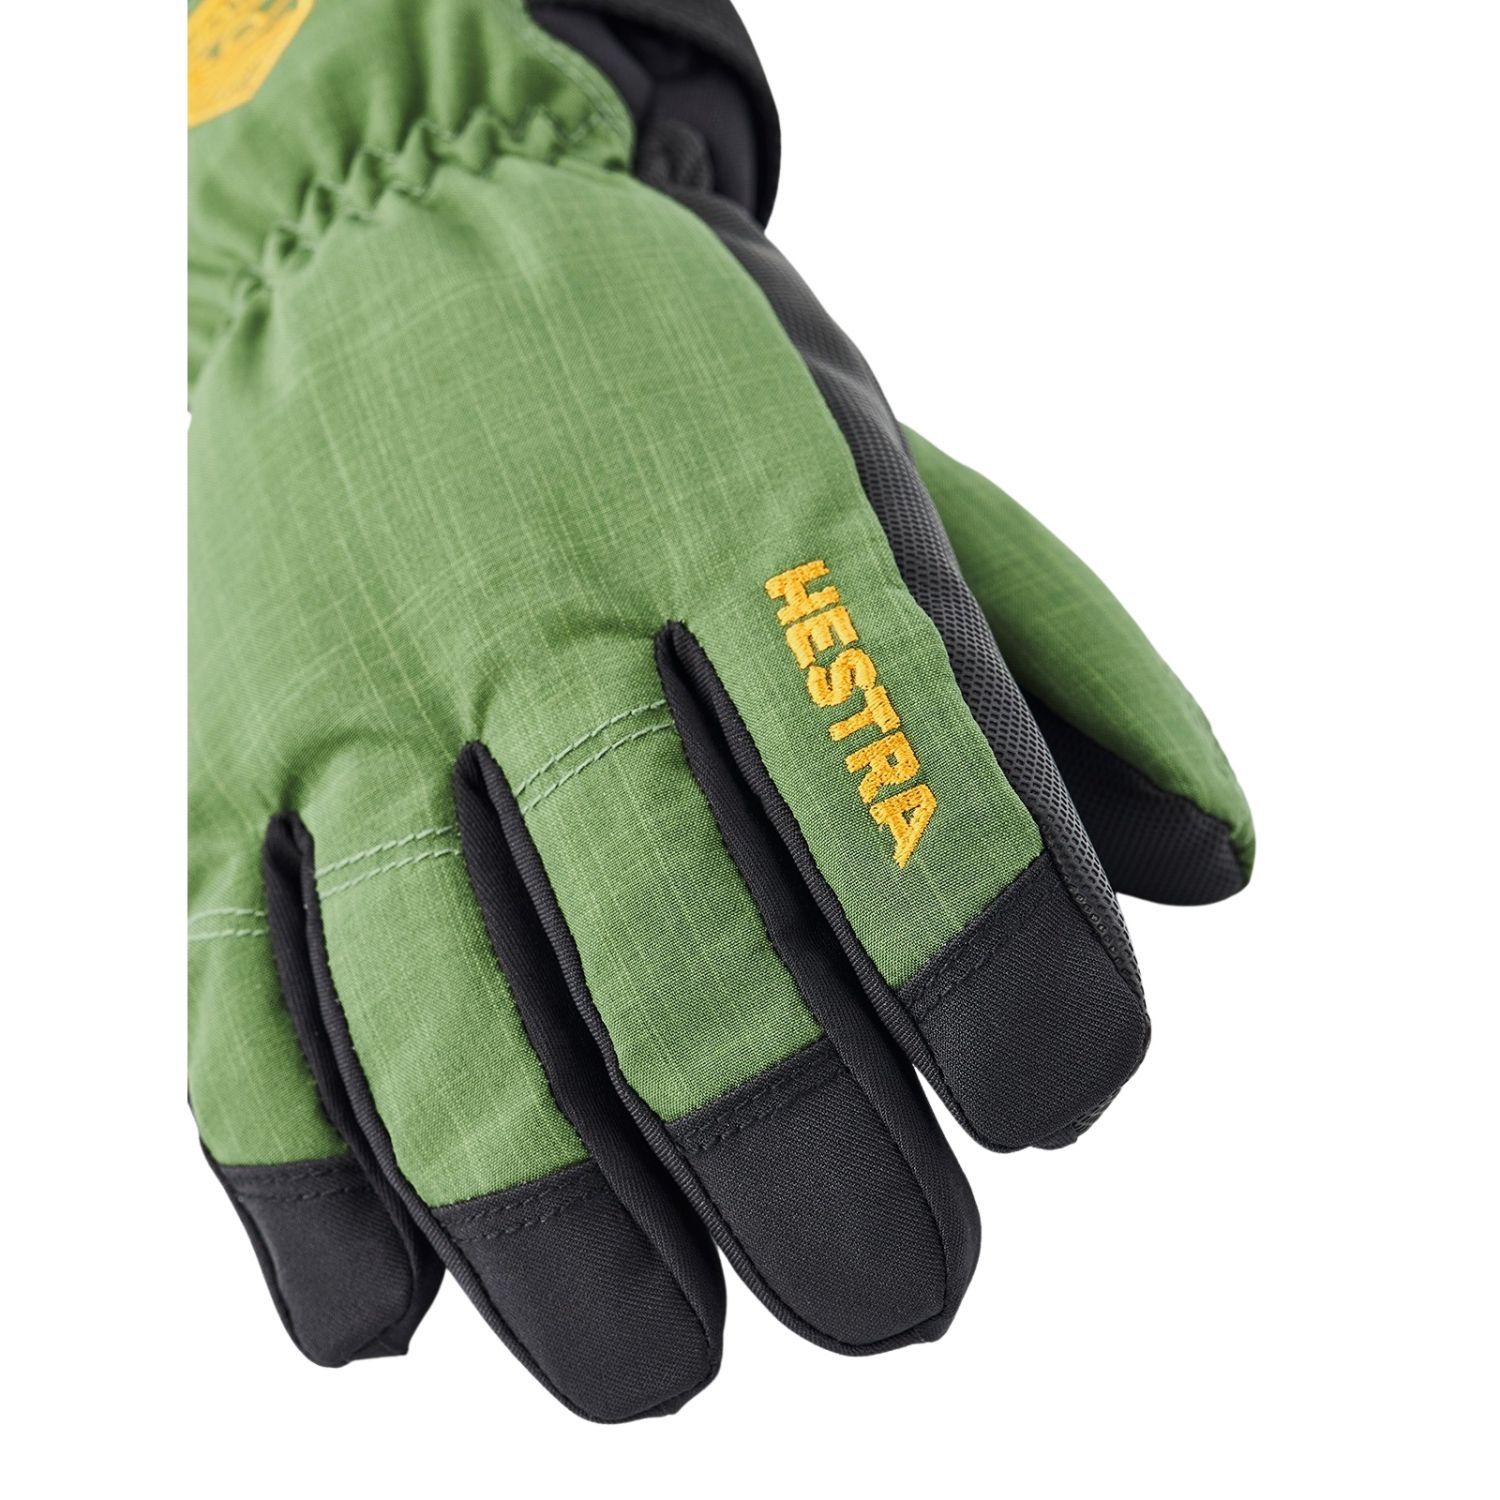 Hestra Ferox Primaloft, ski gloves, junior, green